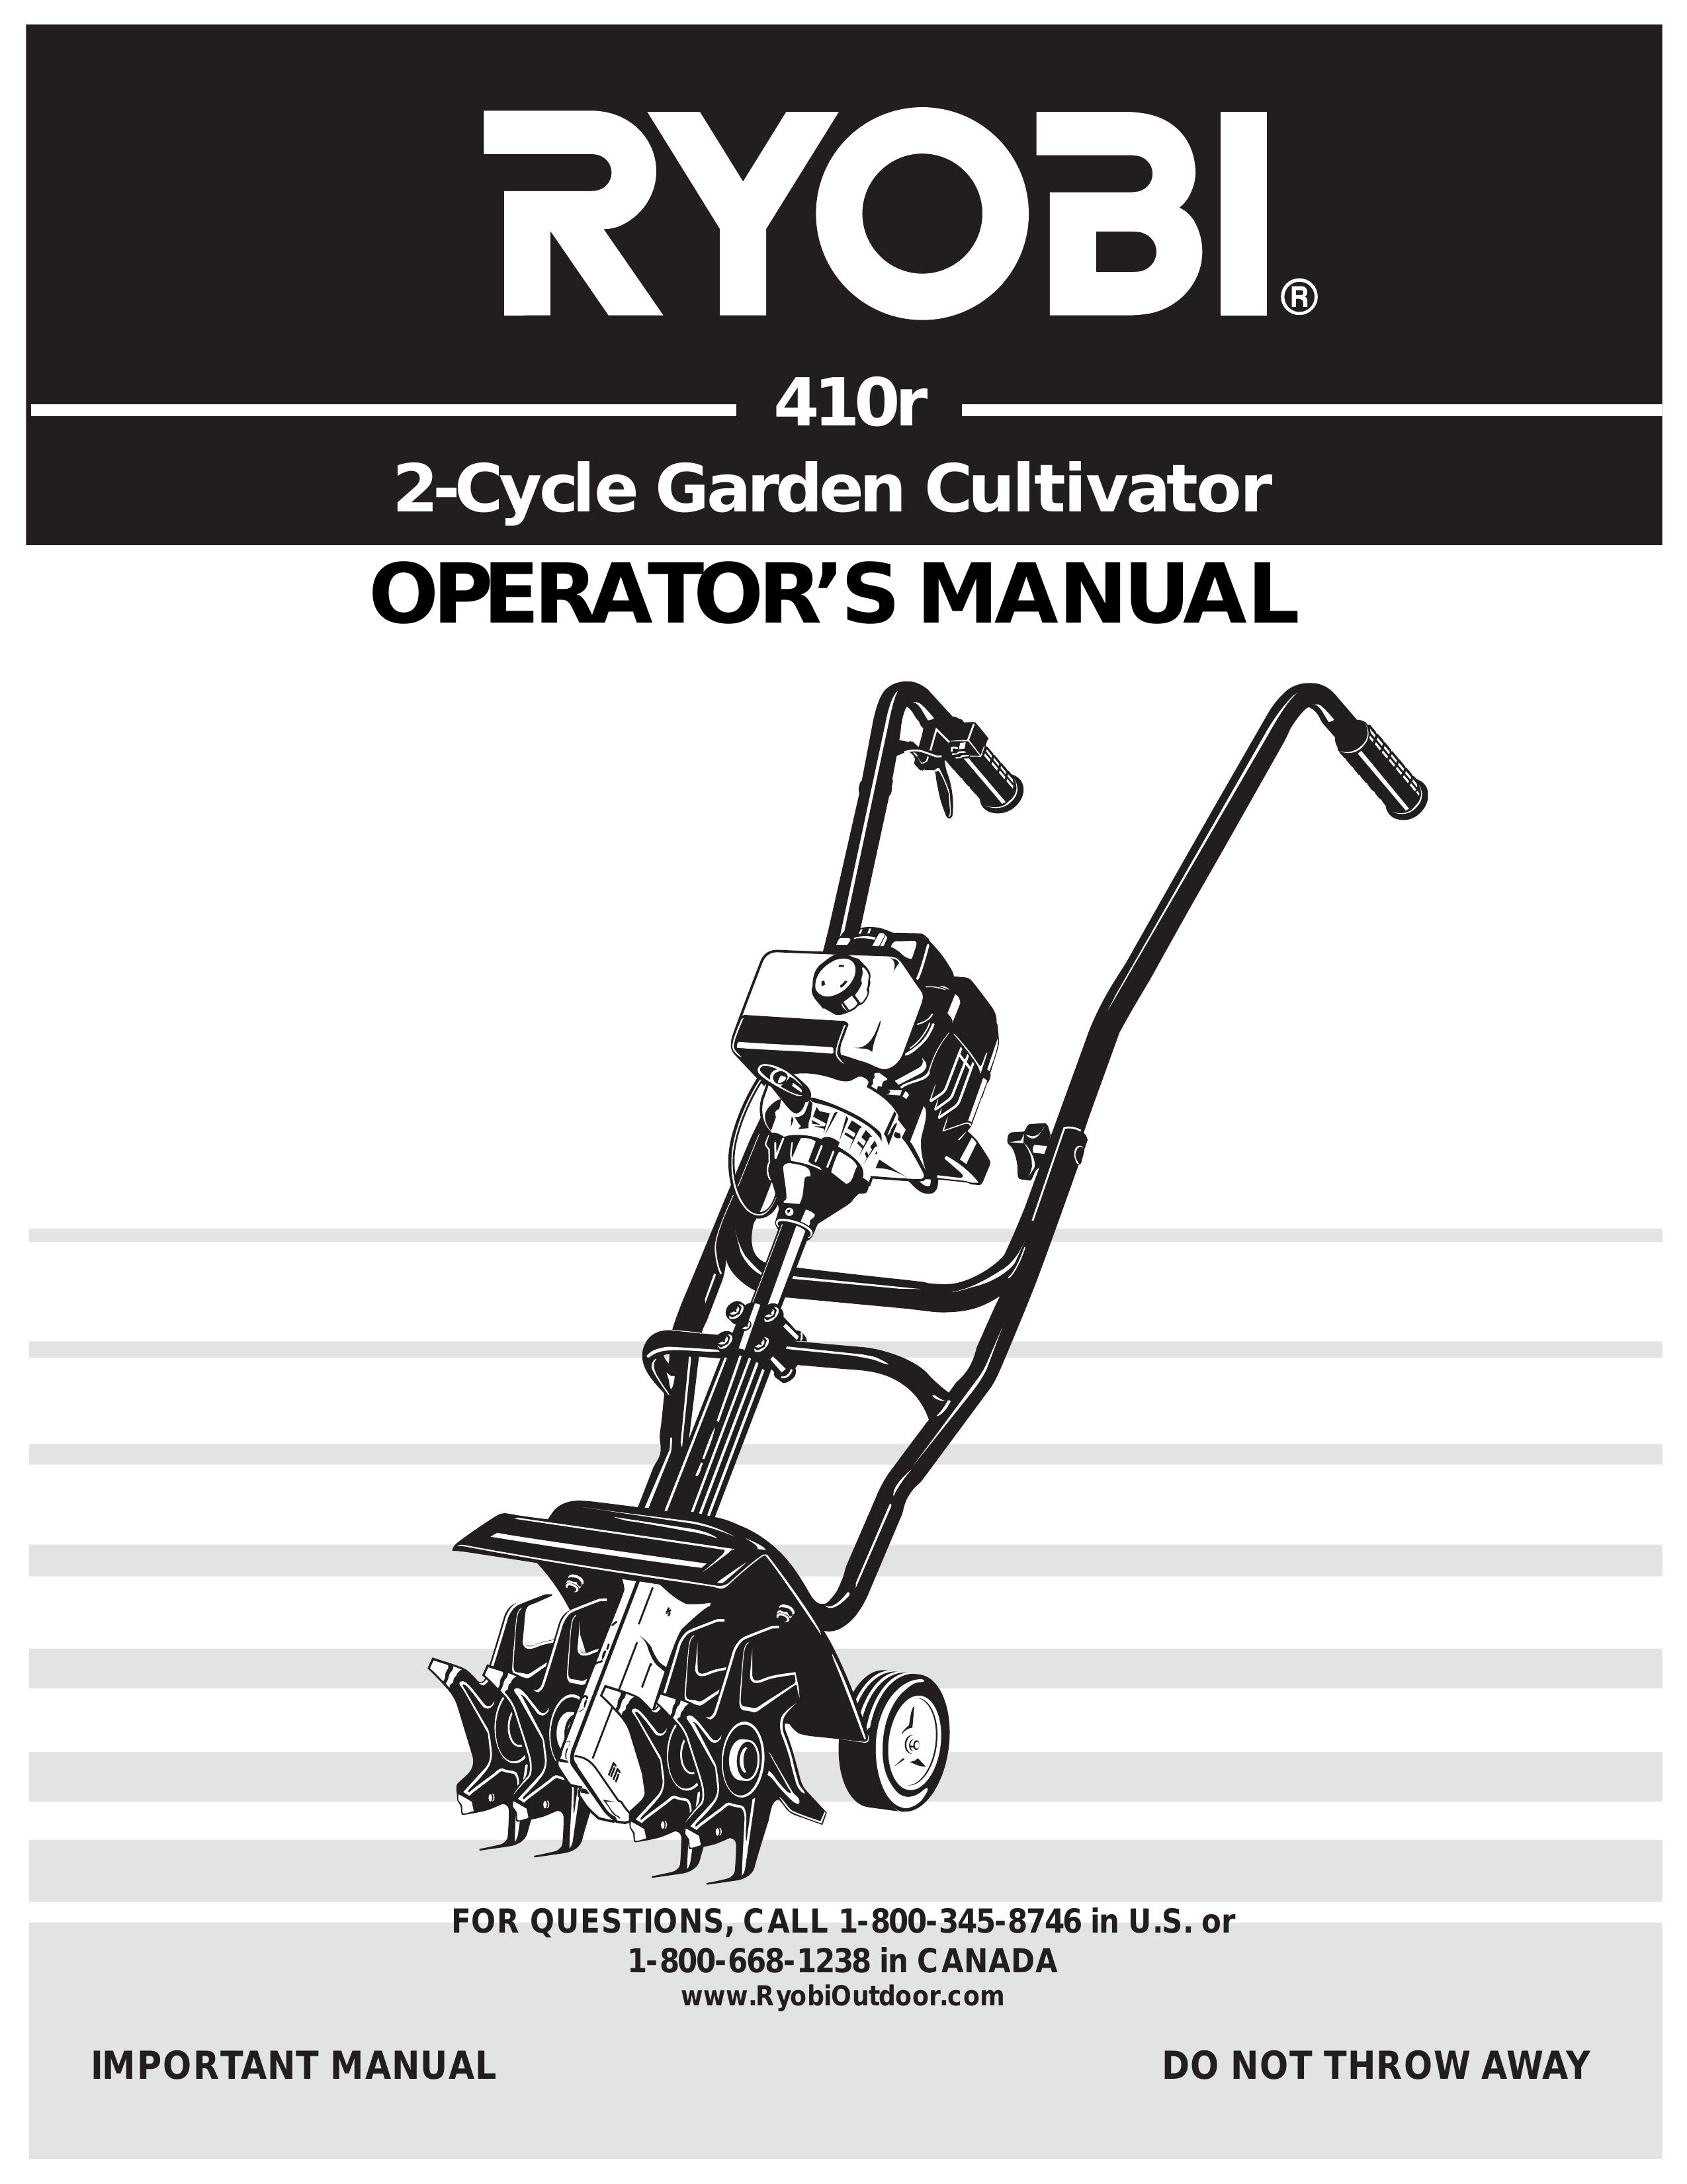 Ryobi Outdoor 410r Cultivator User Manual